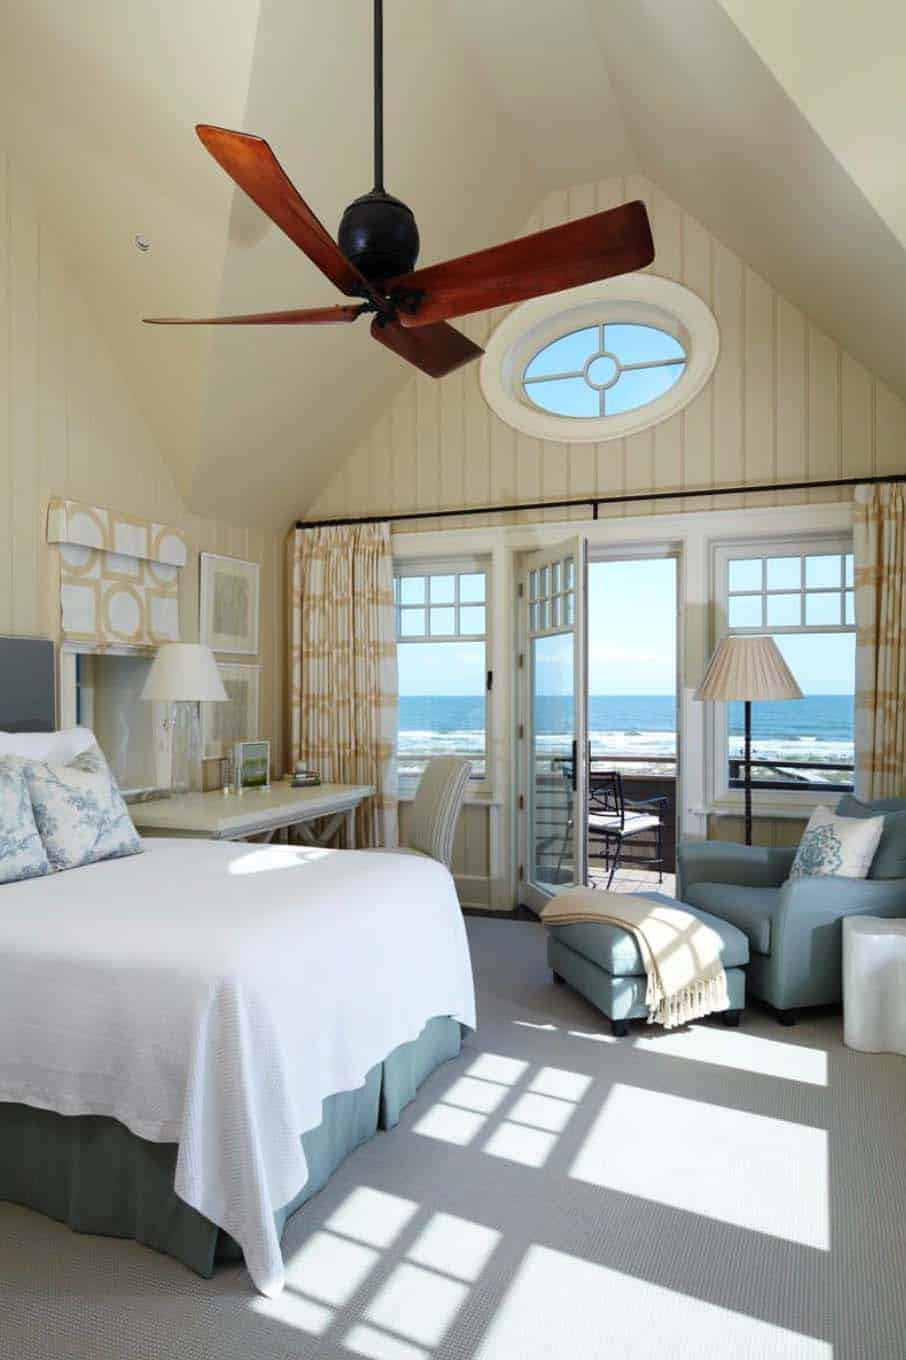 Ocean Bedroom Decorations
 33 Sun drenched bedrooms with mesmerizing ocean views